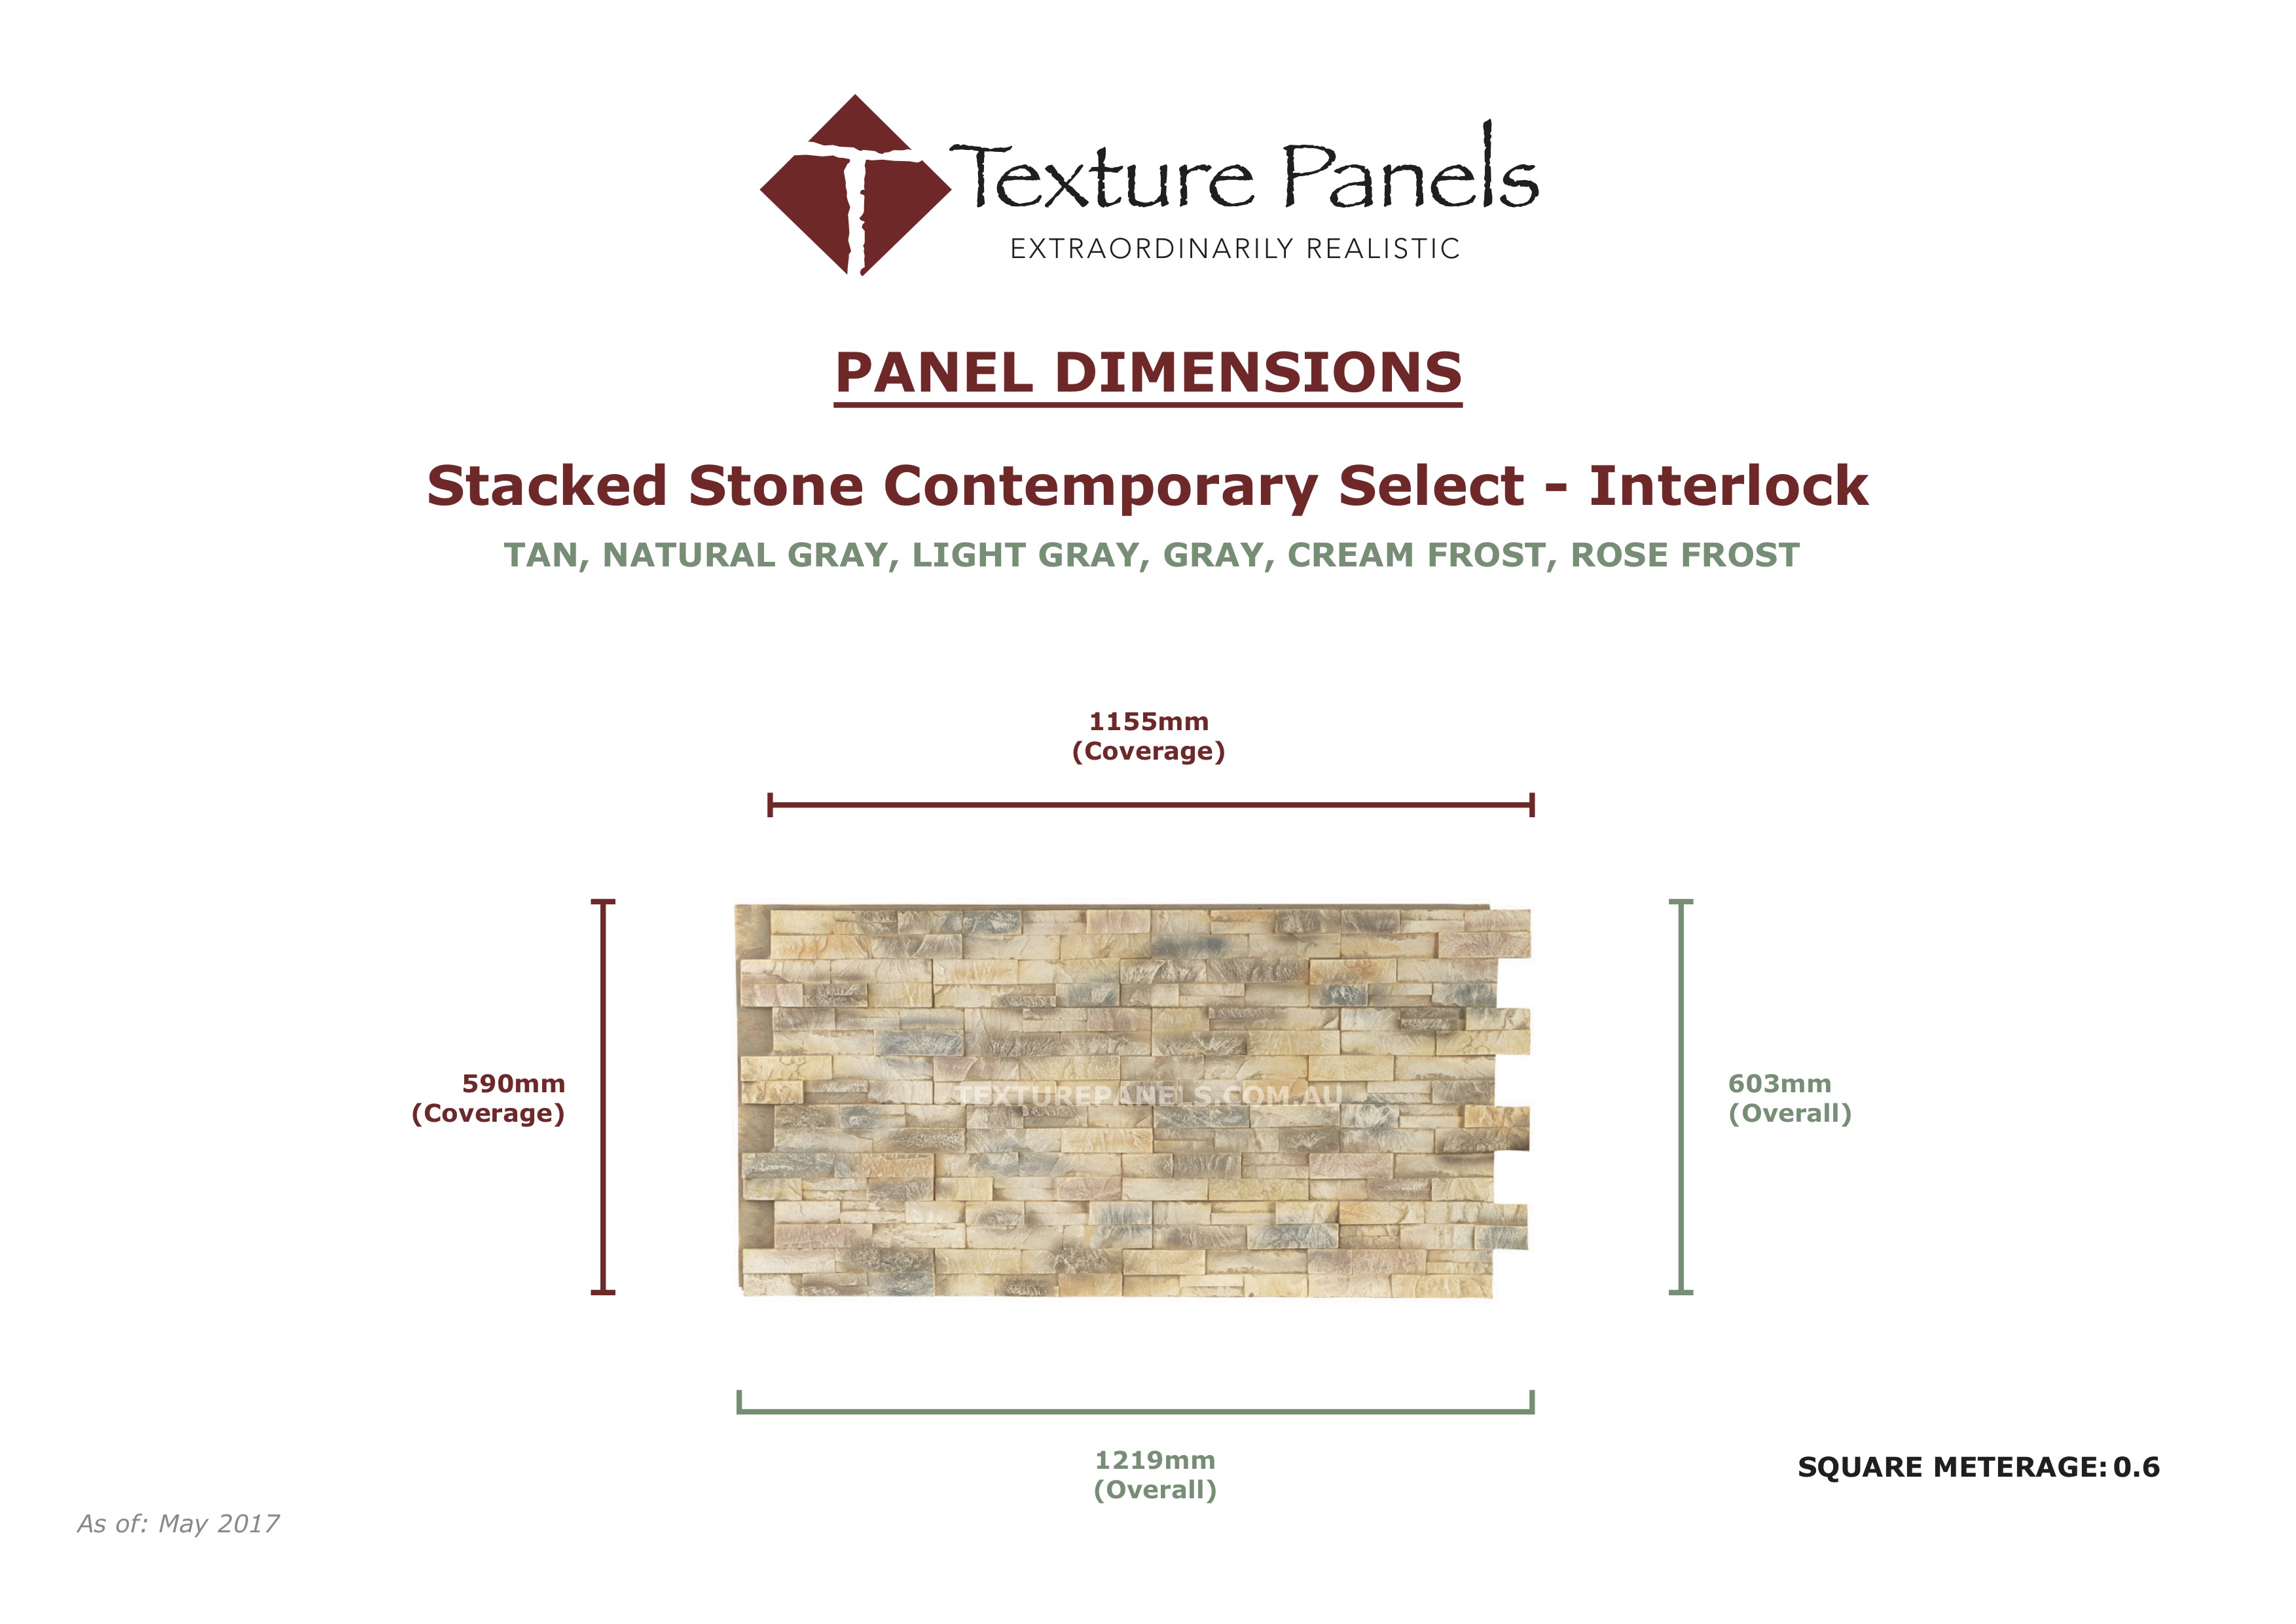 Stacked Stone Contemporary Interlock - Slate Gray Dimensions